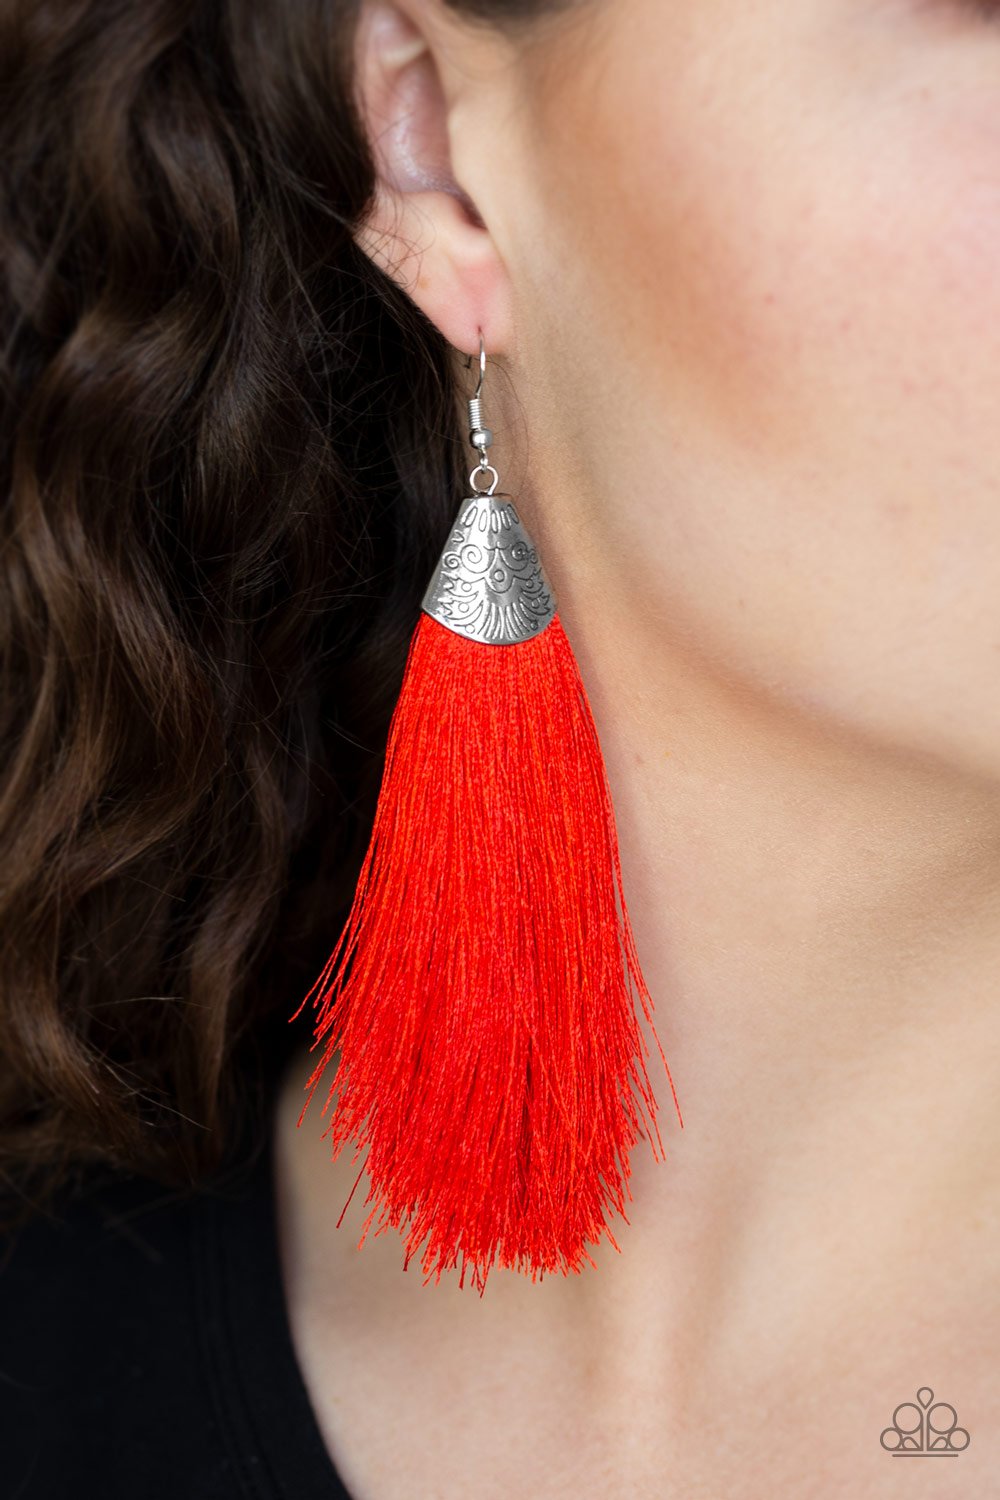 Trendy Tassel Earrings - Red Tassel Earrings - Fringe Earrings - Lulus